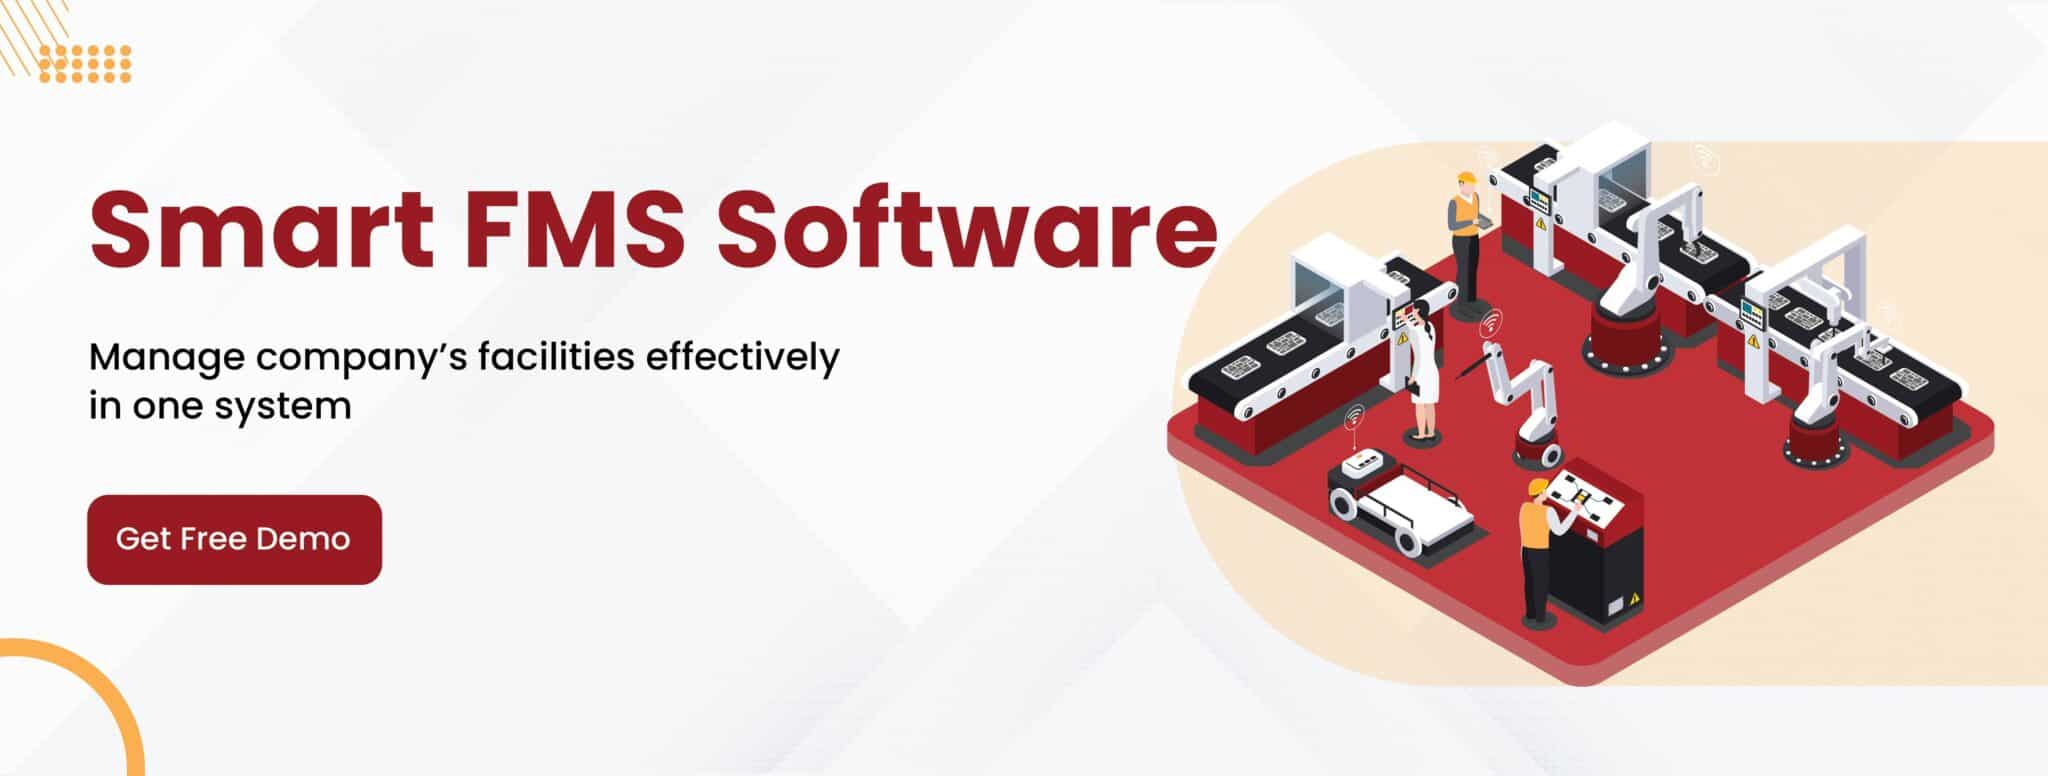 FMS Software Banner